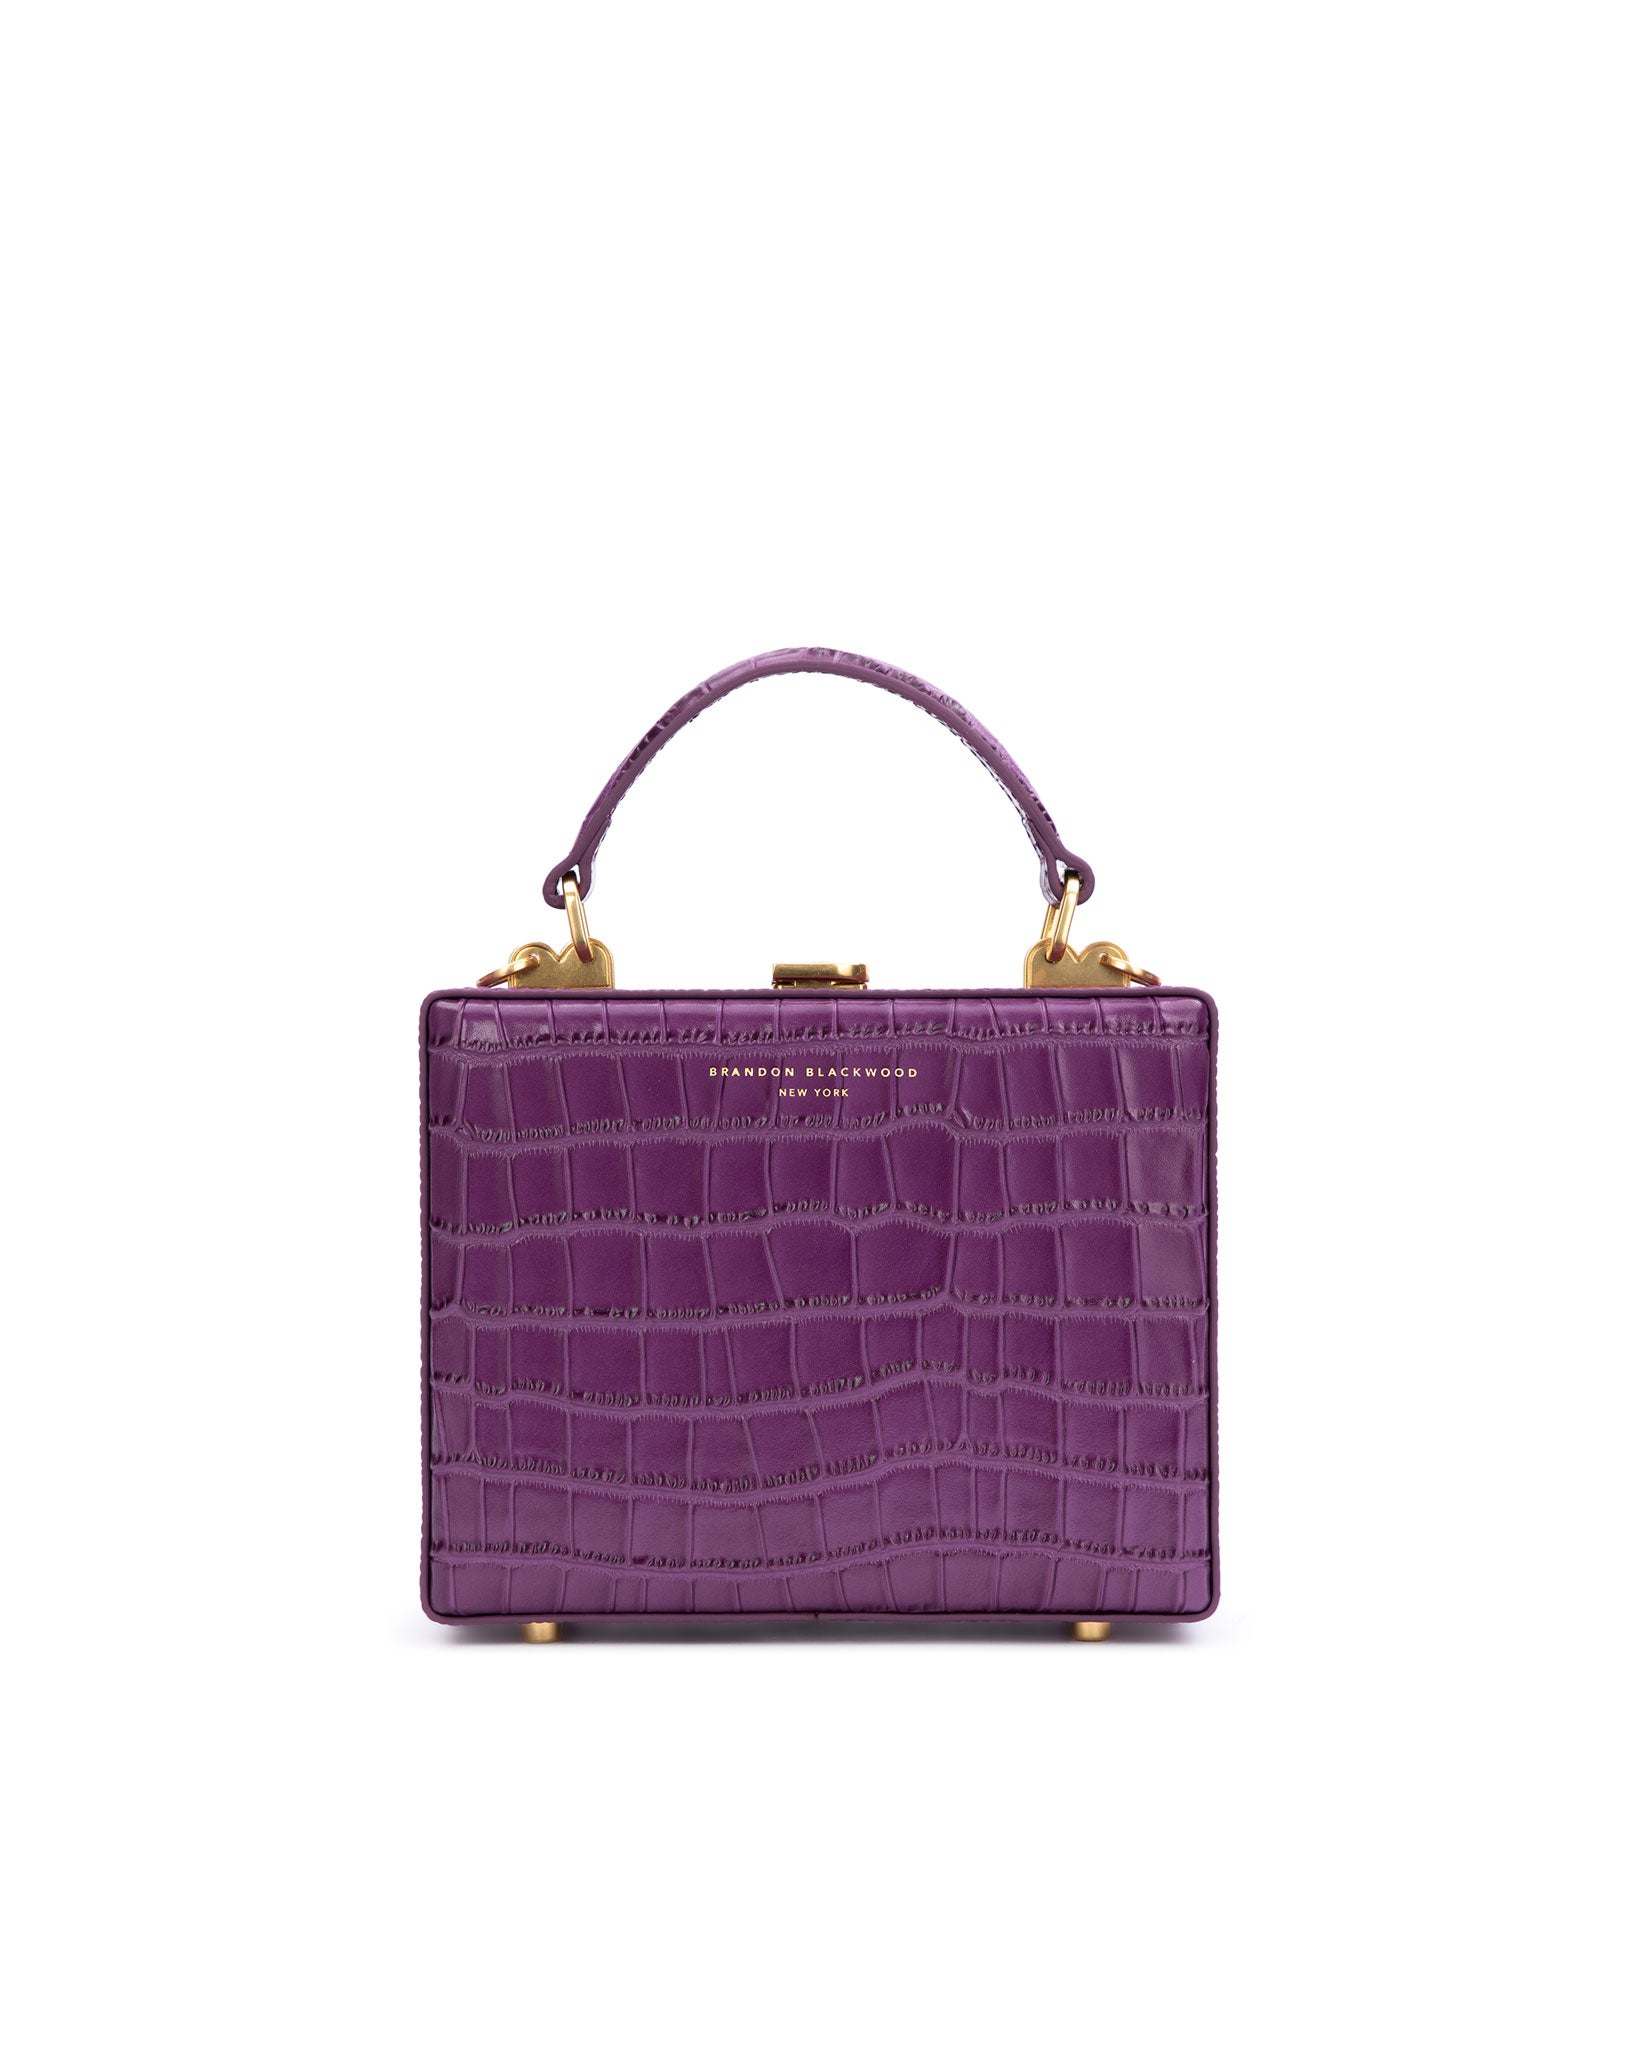 KELLY BAG Violet Lilac Crocodile Print Calfskin